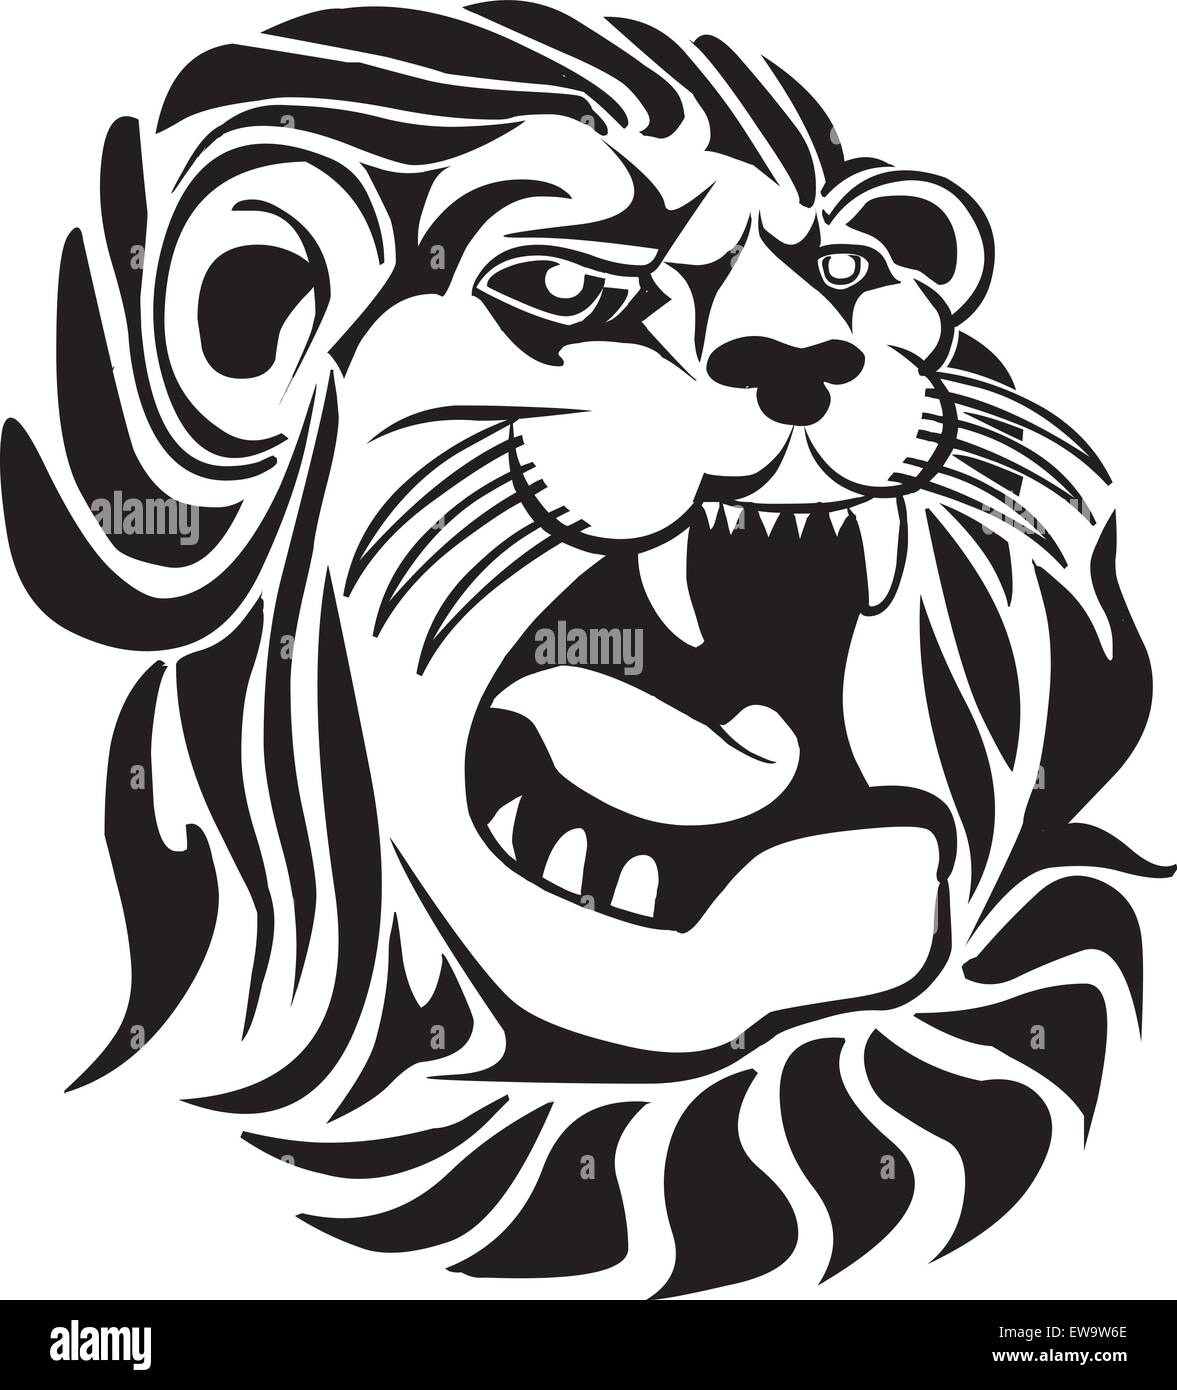 Lion Tattoo Stock Illustrations  19650 Lion Tattoo Stock Illustrations  Vectors  Clipart  Dreamstime